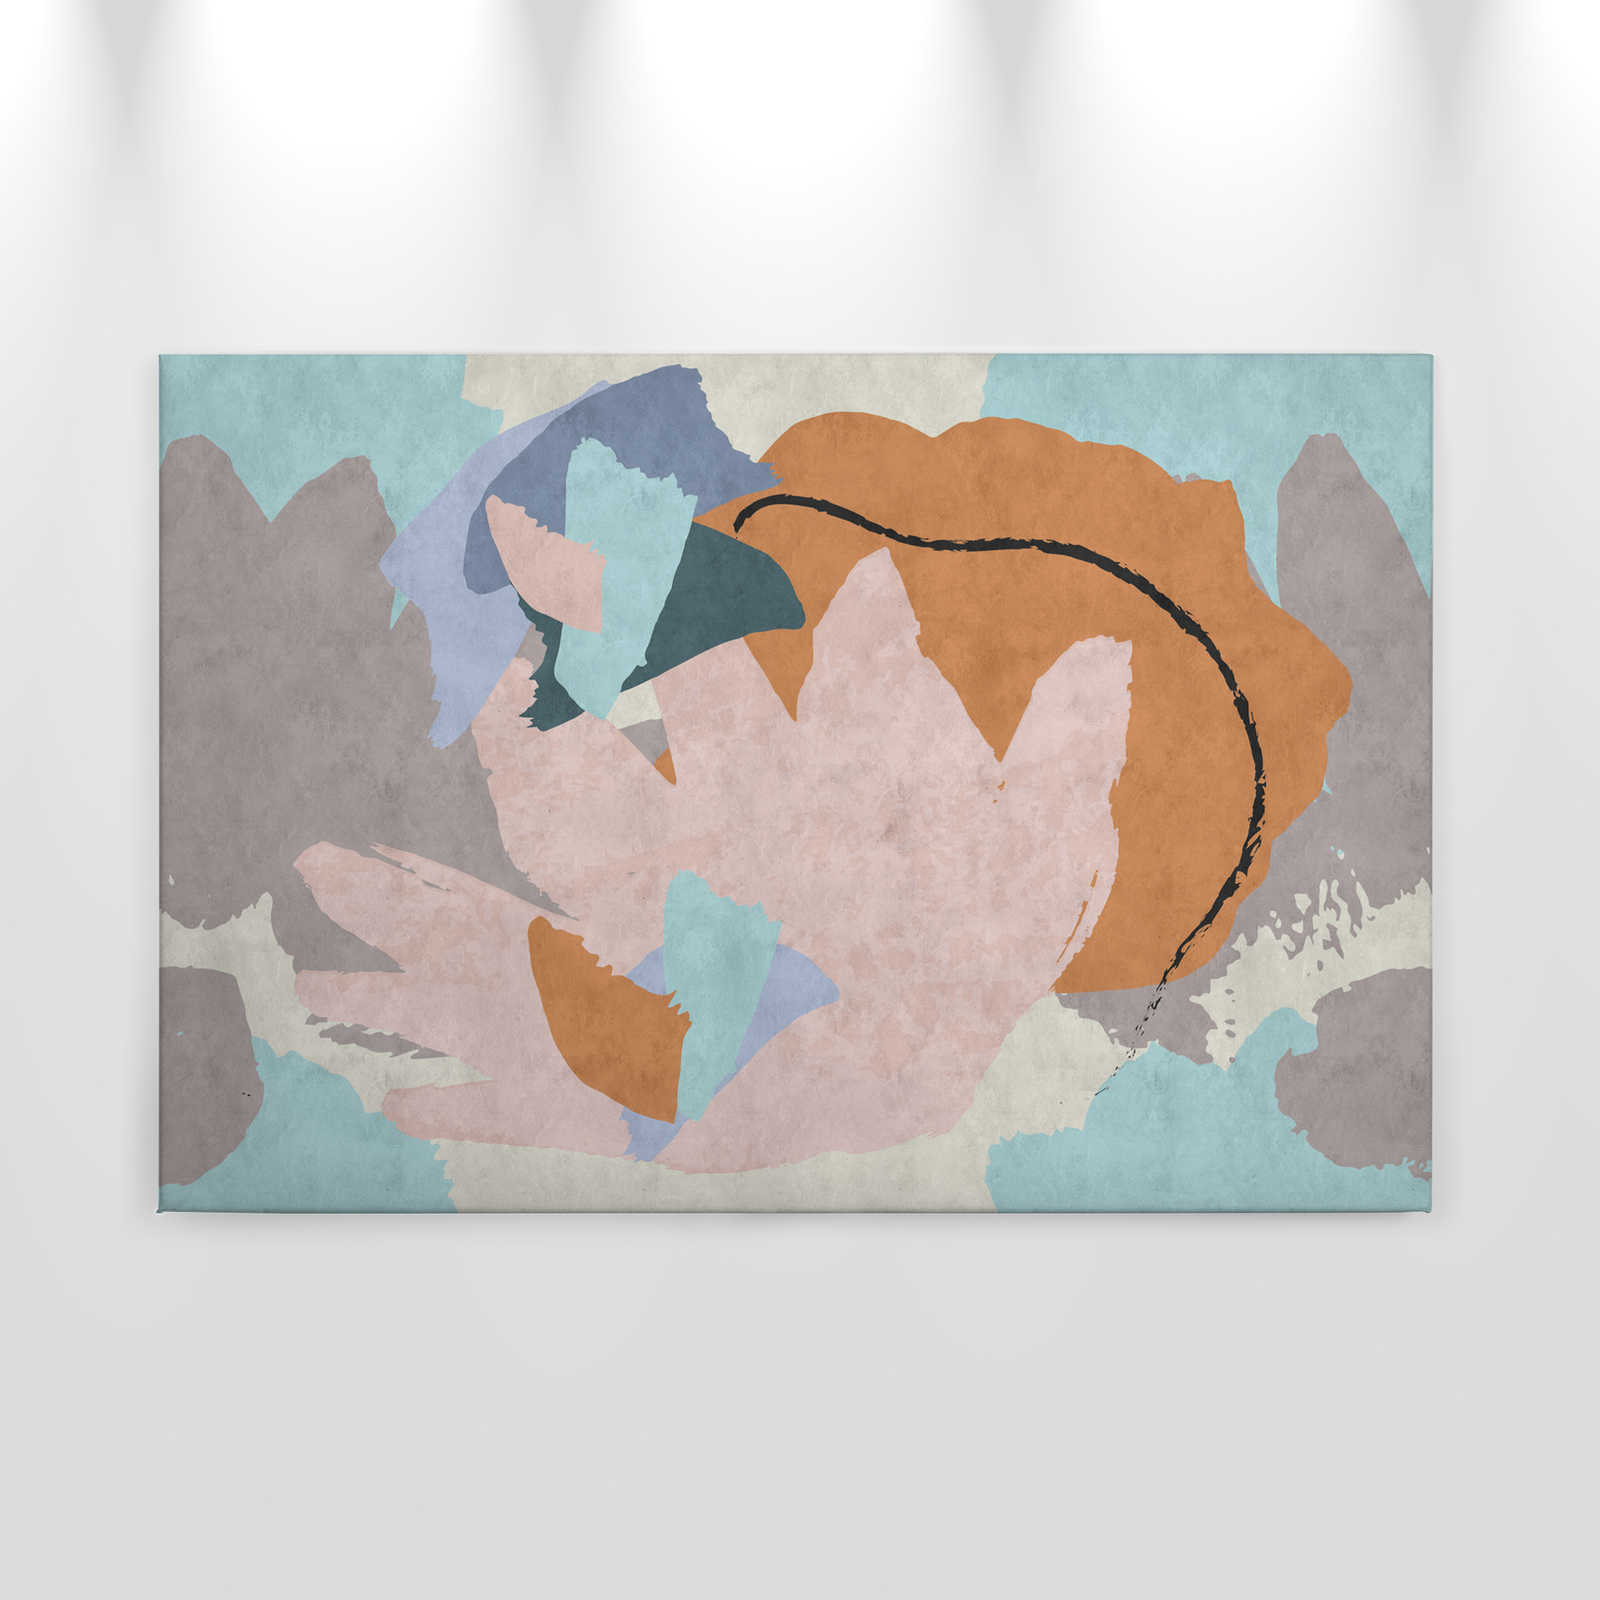             Floral Collage 2 - toile moderne art abstrait structure buvard - 0,90 m x 0,60 m
        